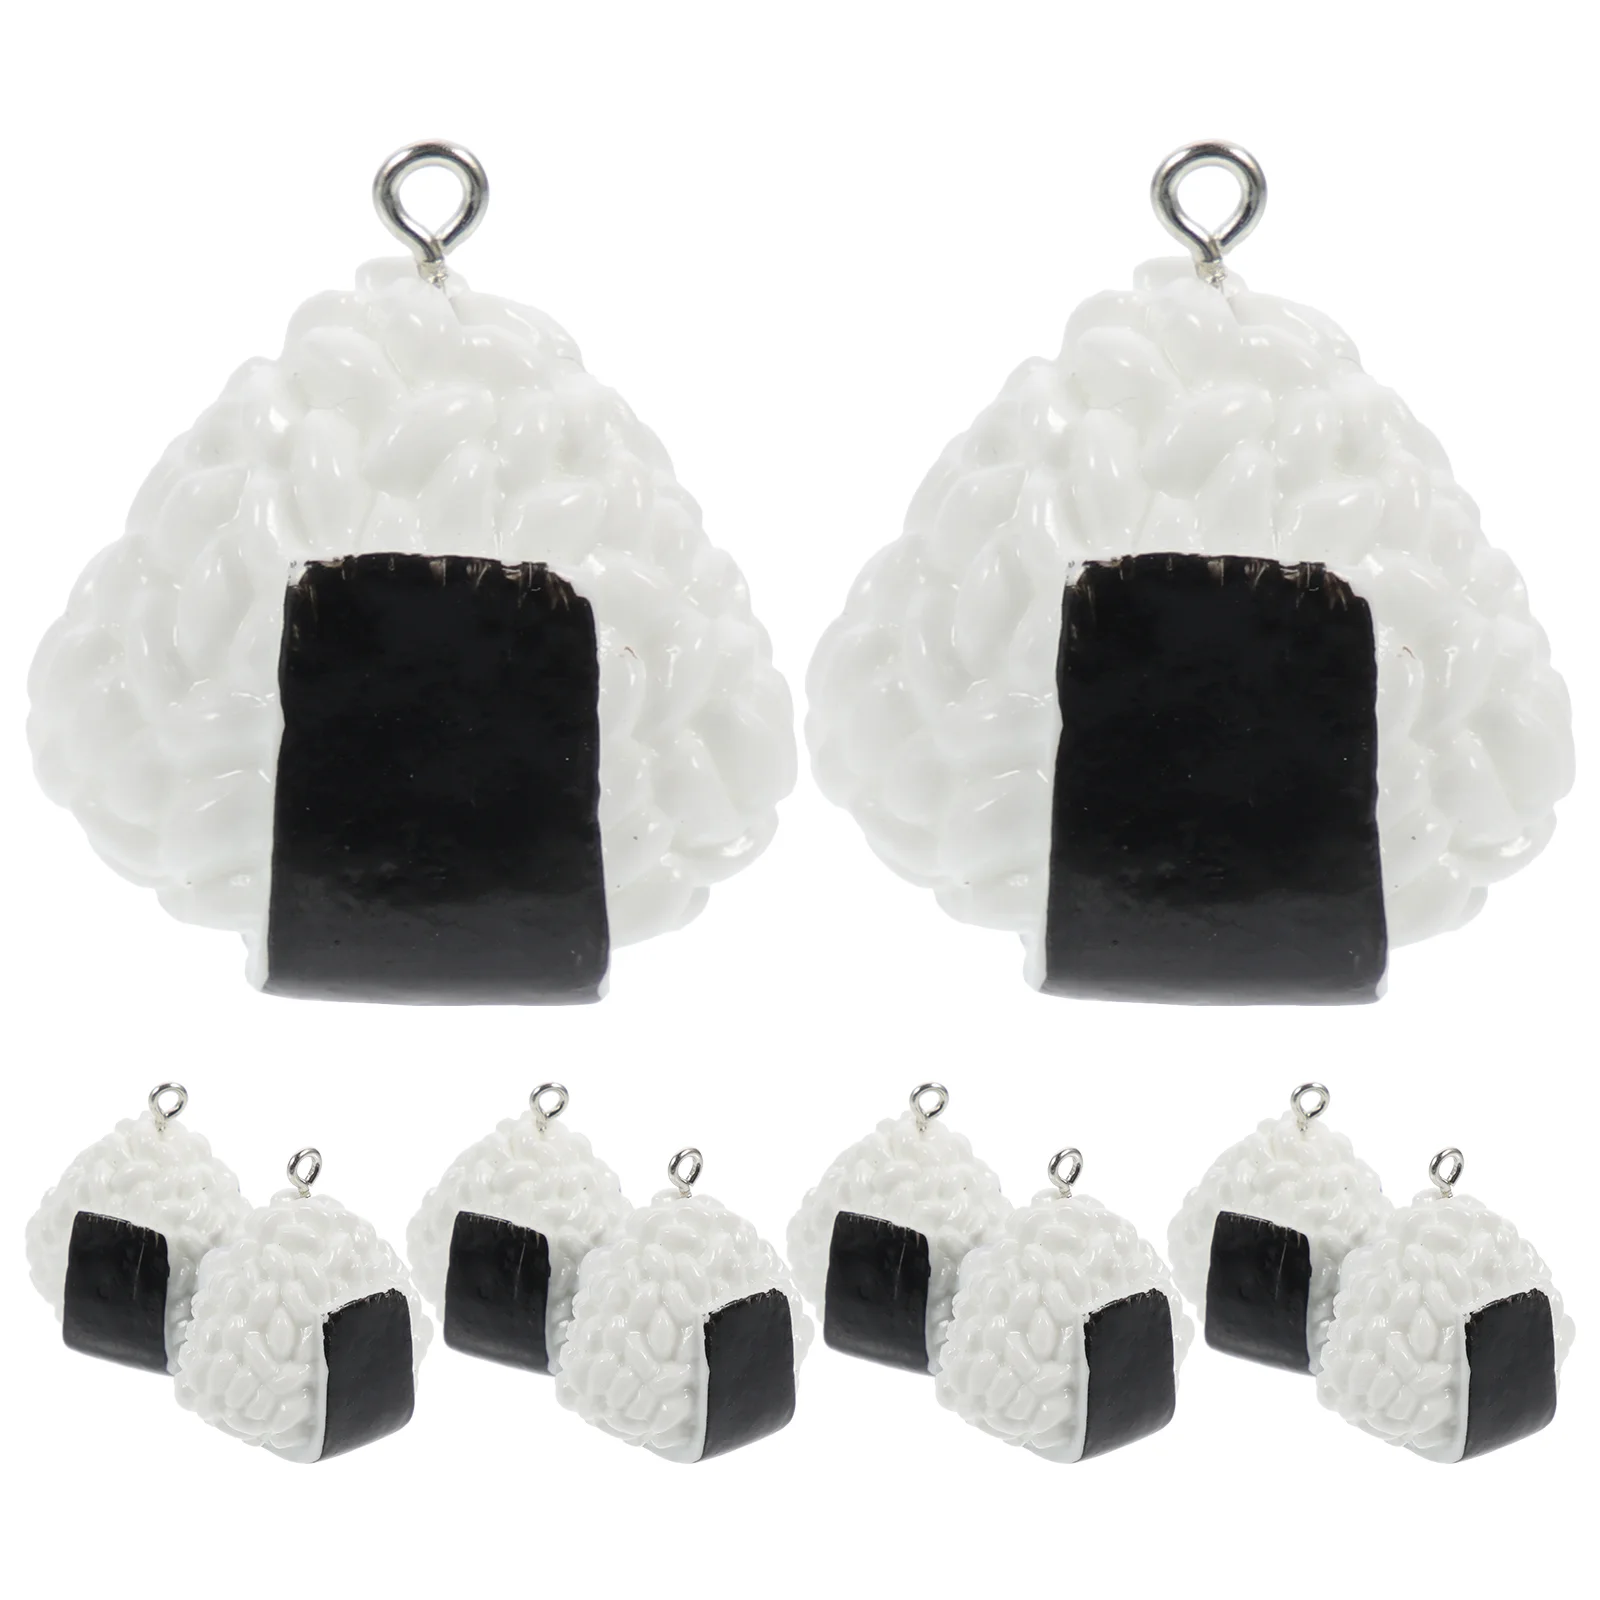 

10 Pcs Imitation Sushi Rice Ball Keychains Crafts Bag Hanging Charms Decorative Bracelet Food Resin Pendant Pendants